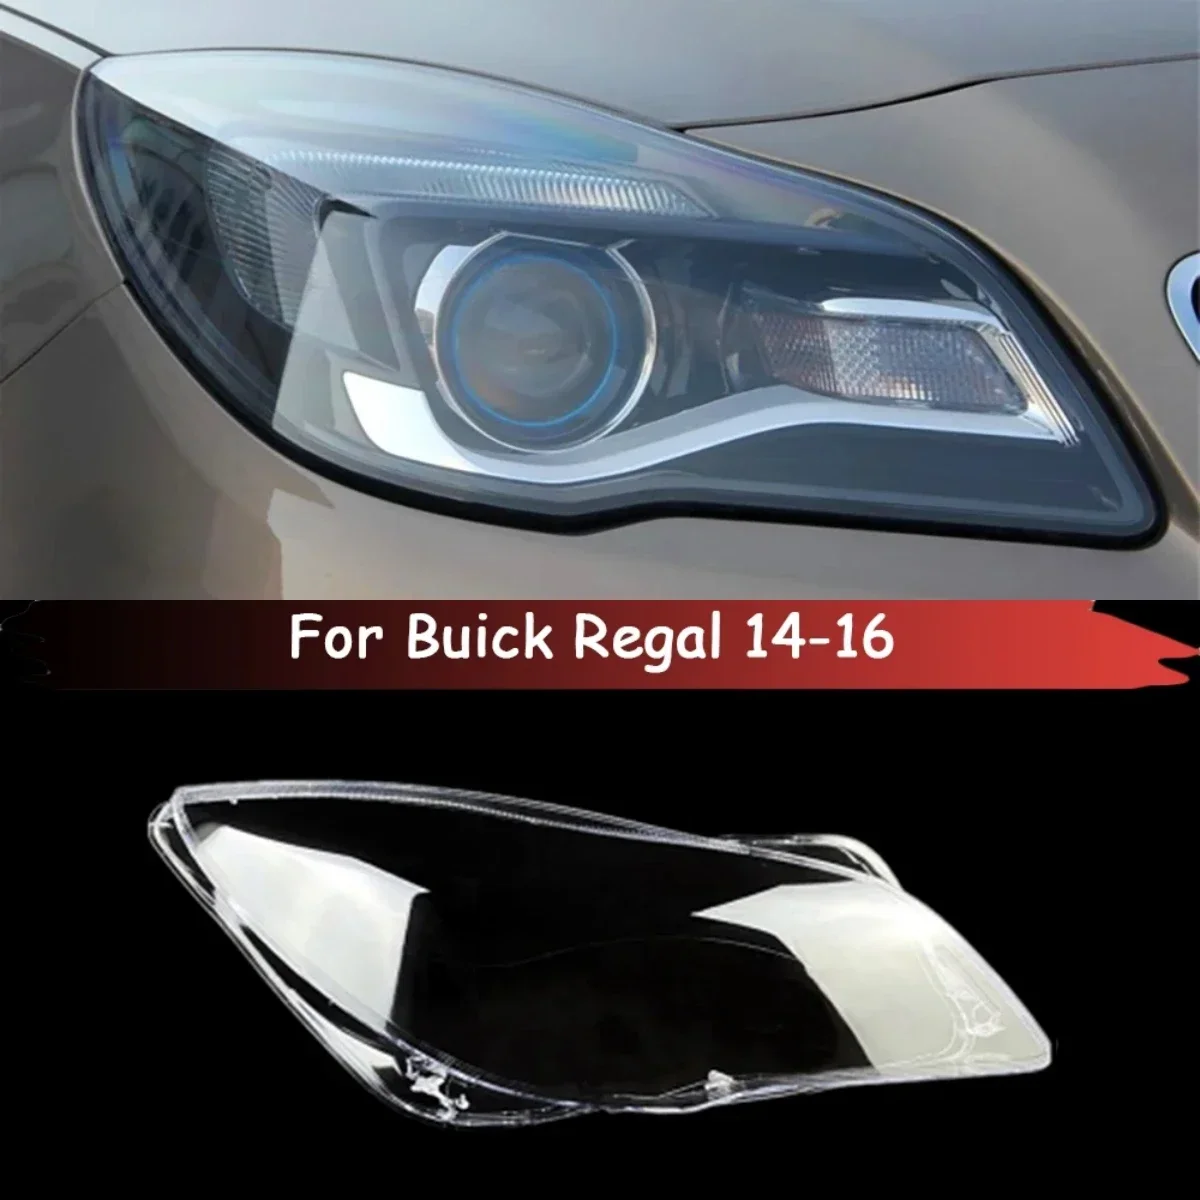 

Для Buick Regal Автомобильная передняя фара стеклянная Автомобильная оболочка фара искусственный абажур головная лампа крышка лампы 2014 2015 2016